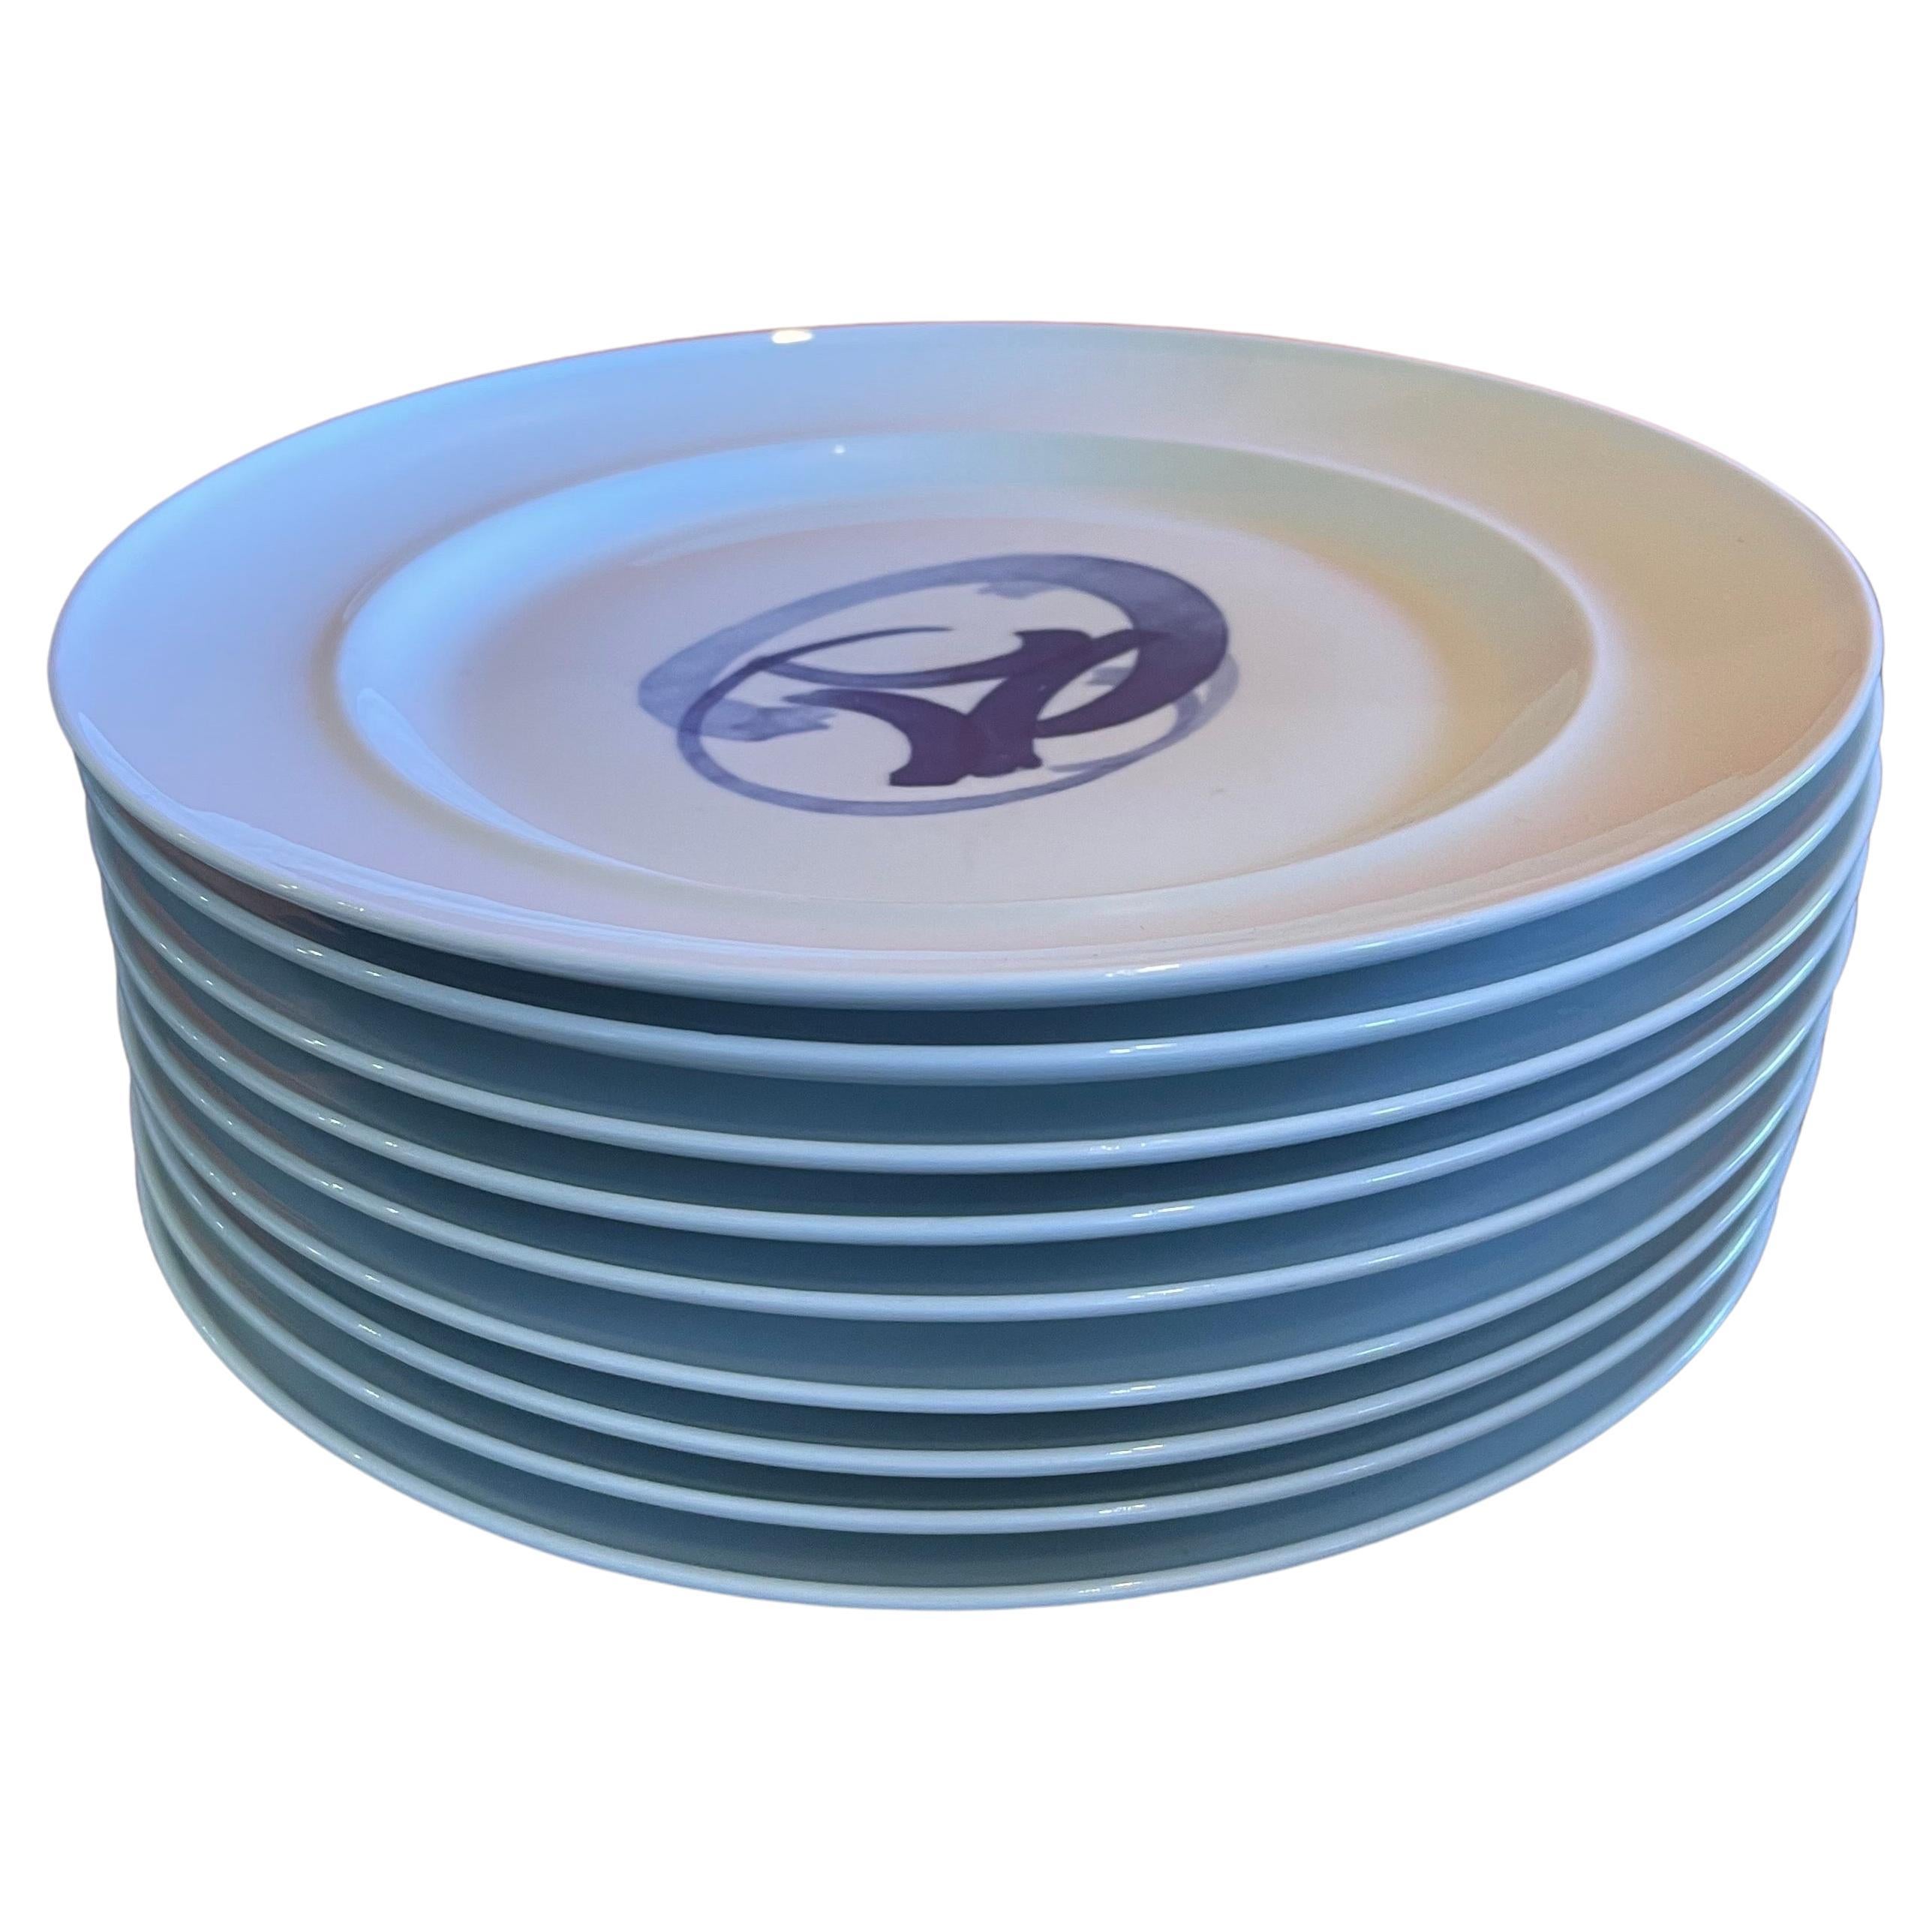 Set of Nine Blue Koppel Porcelain Dinner Plates by Bing & Grondahl For Sale